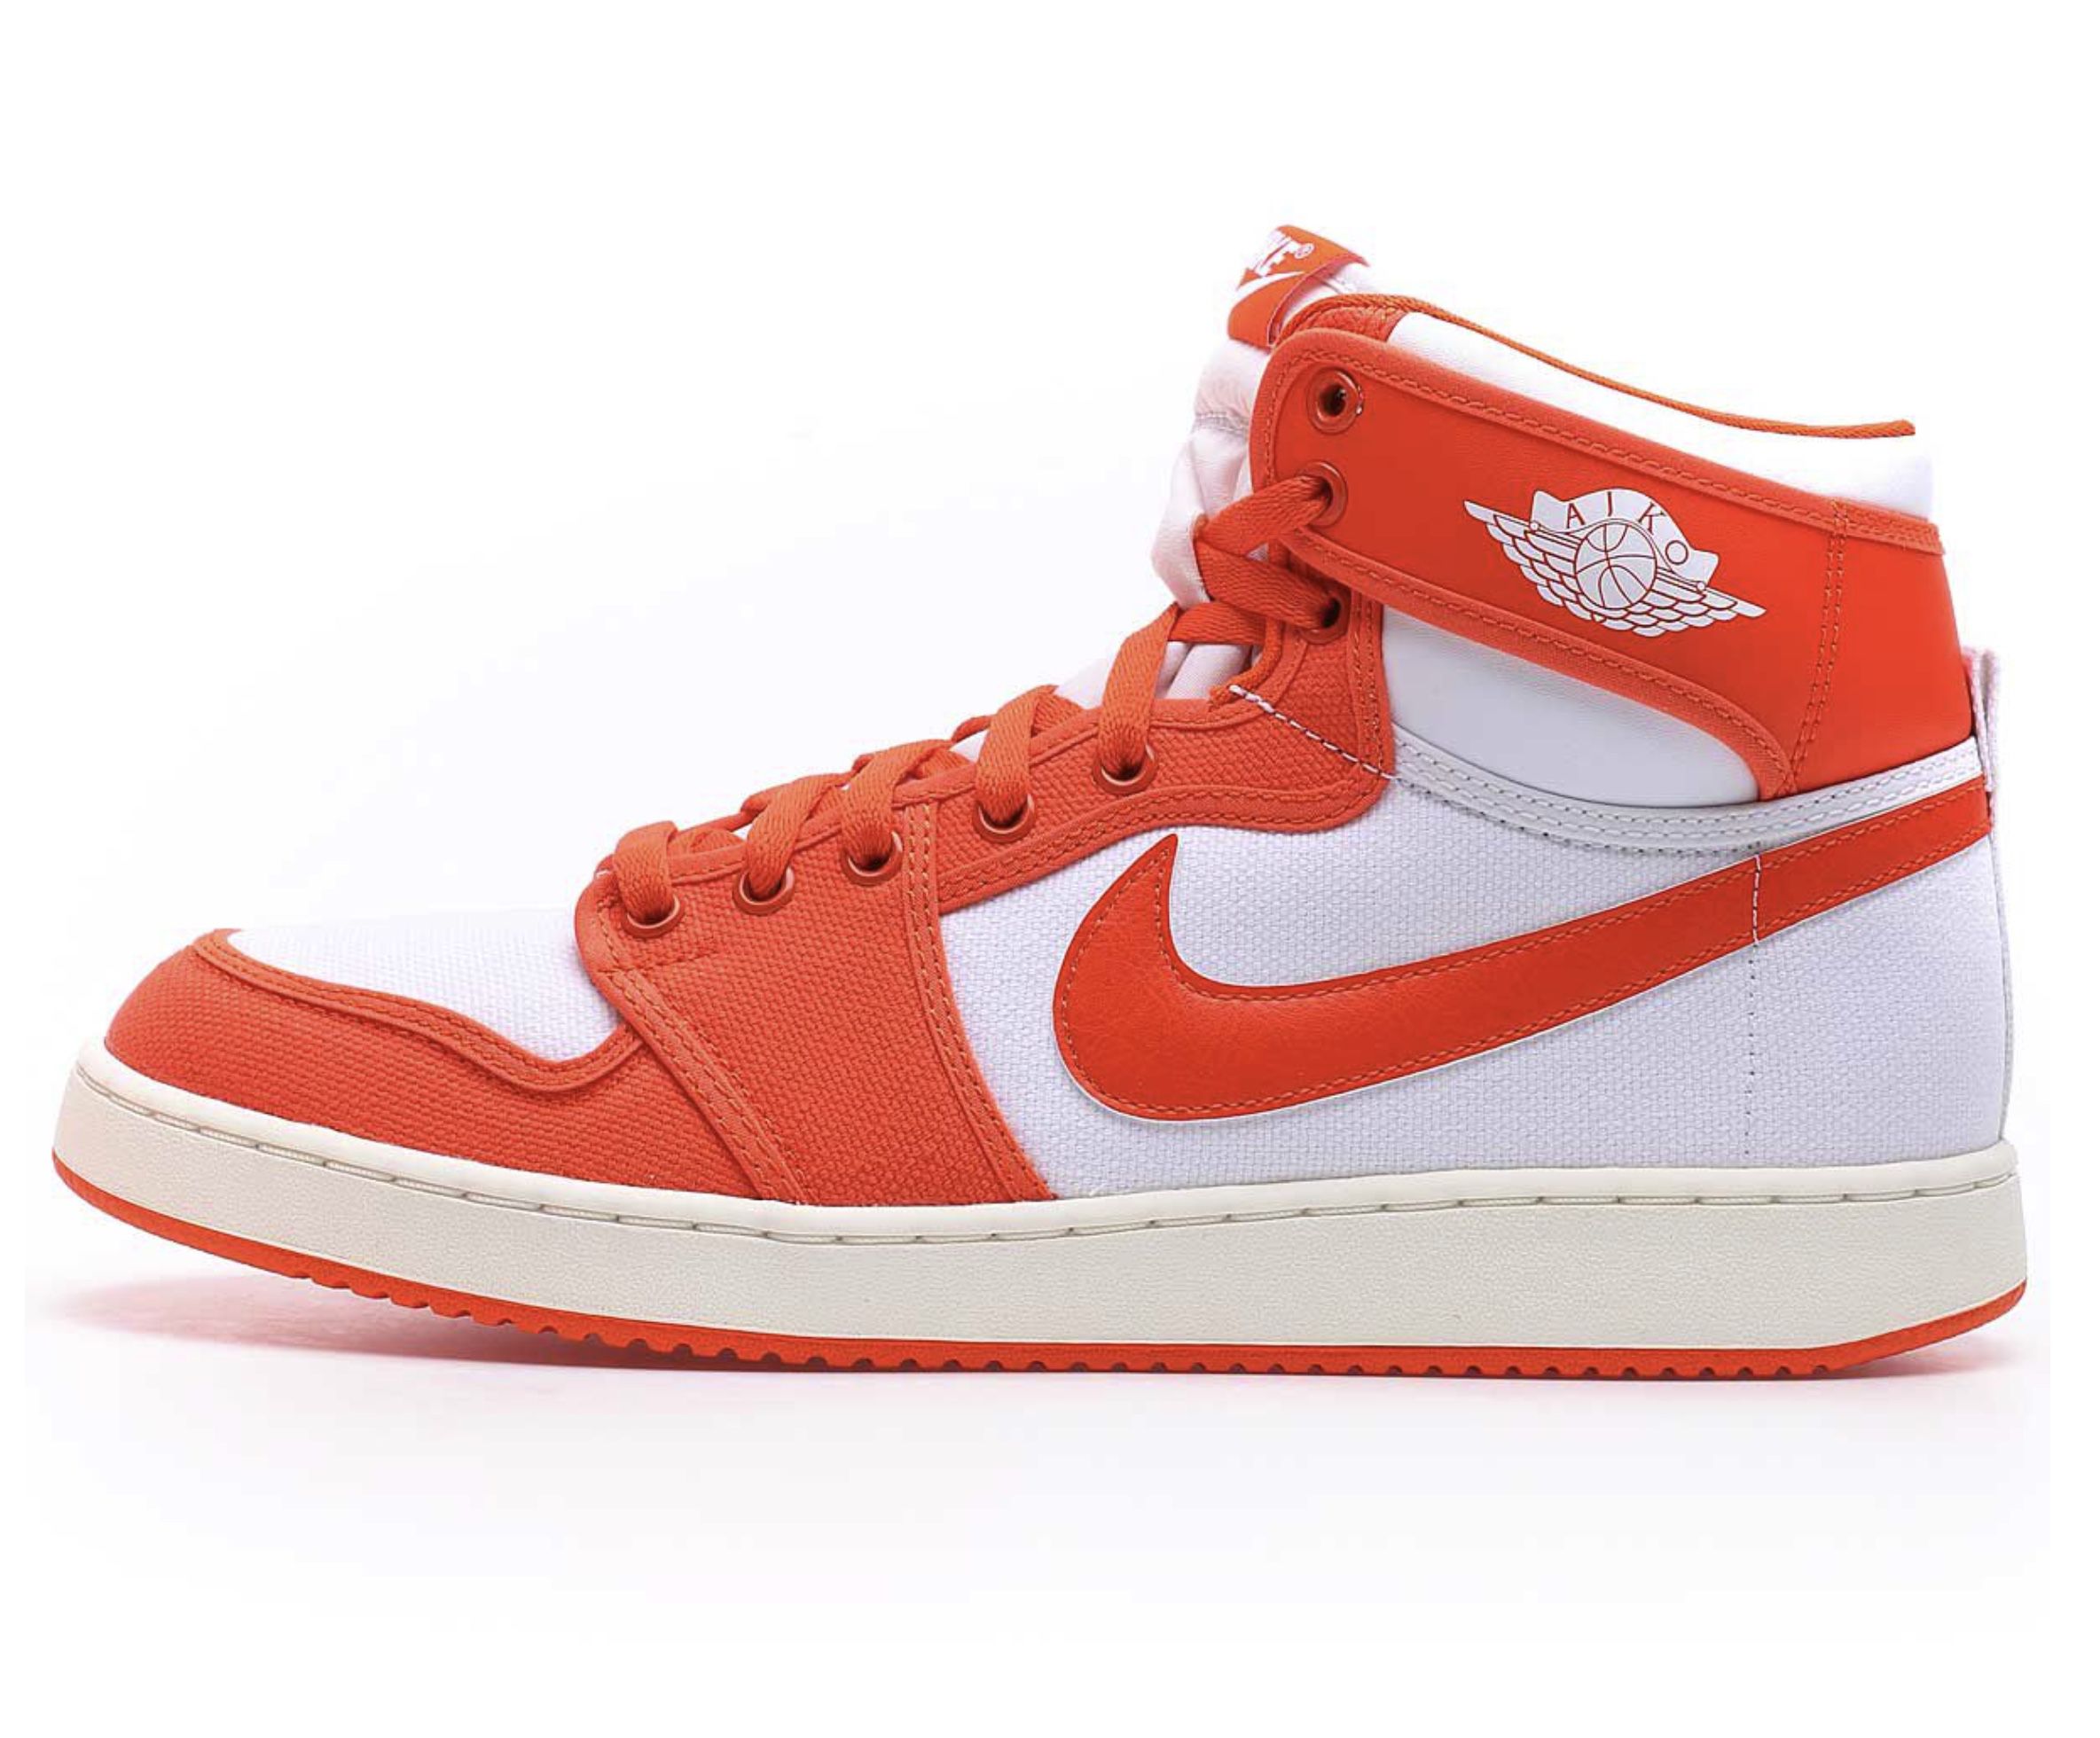 Nike Jordan 1 AJKO in Orange-Weiß für 84,99€ (statt 136€)